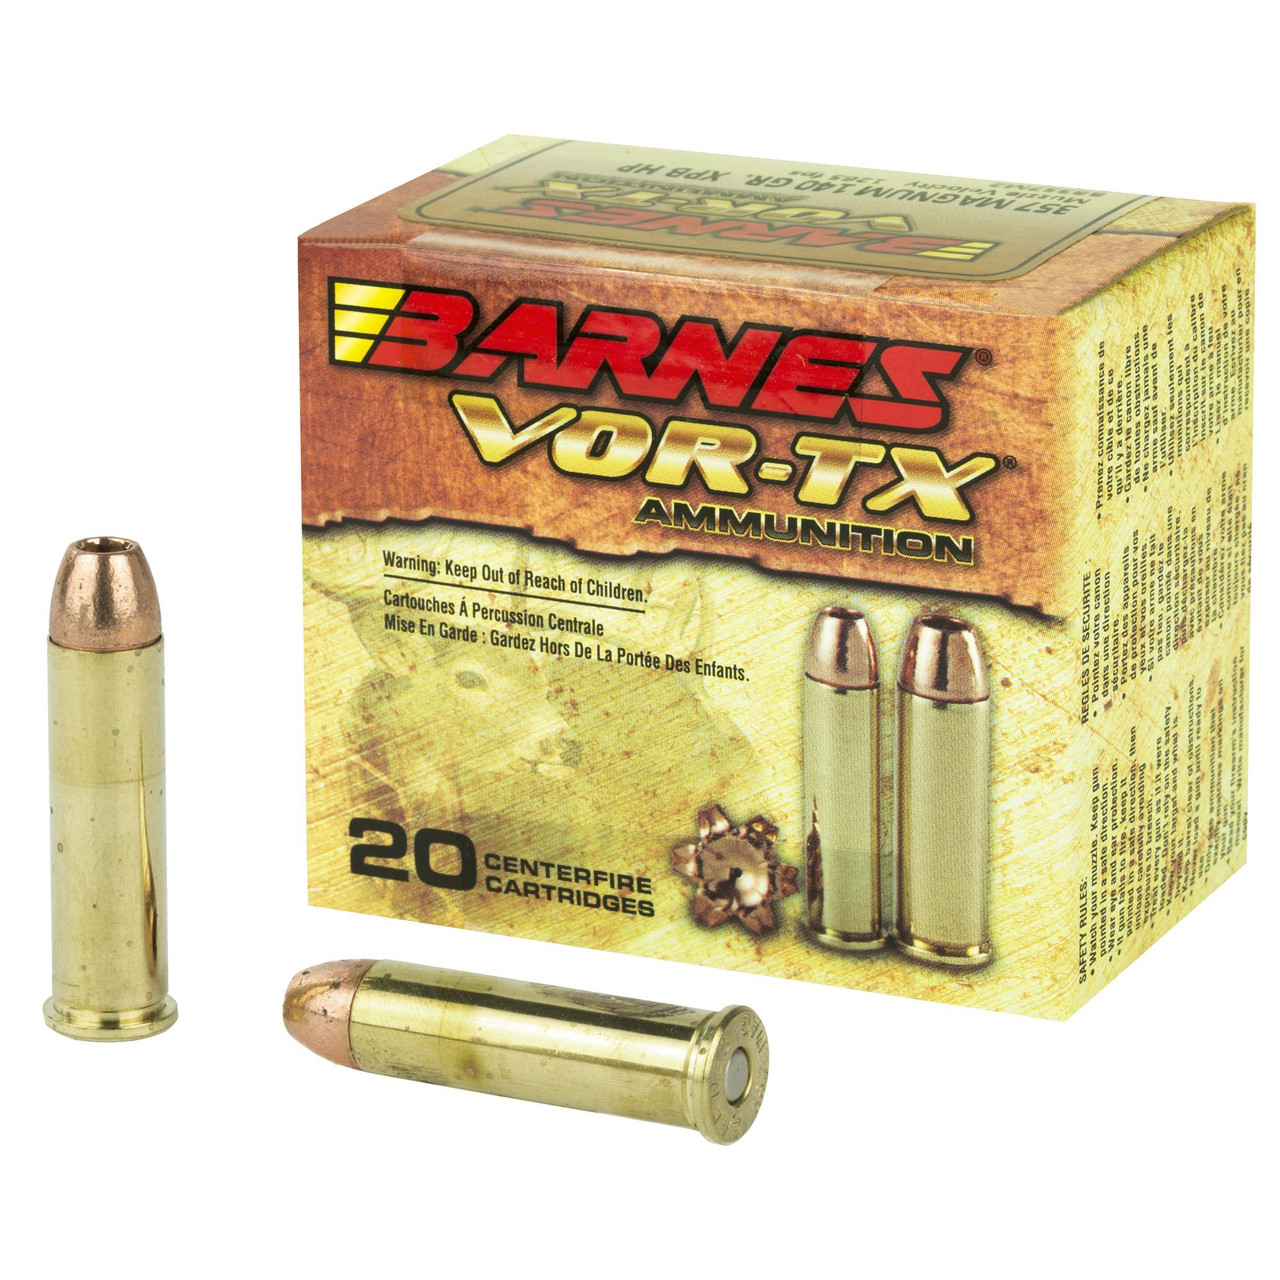 Barnes Bullets VOR-TX TTSX .357 Magnum 21543